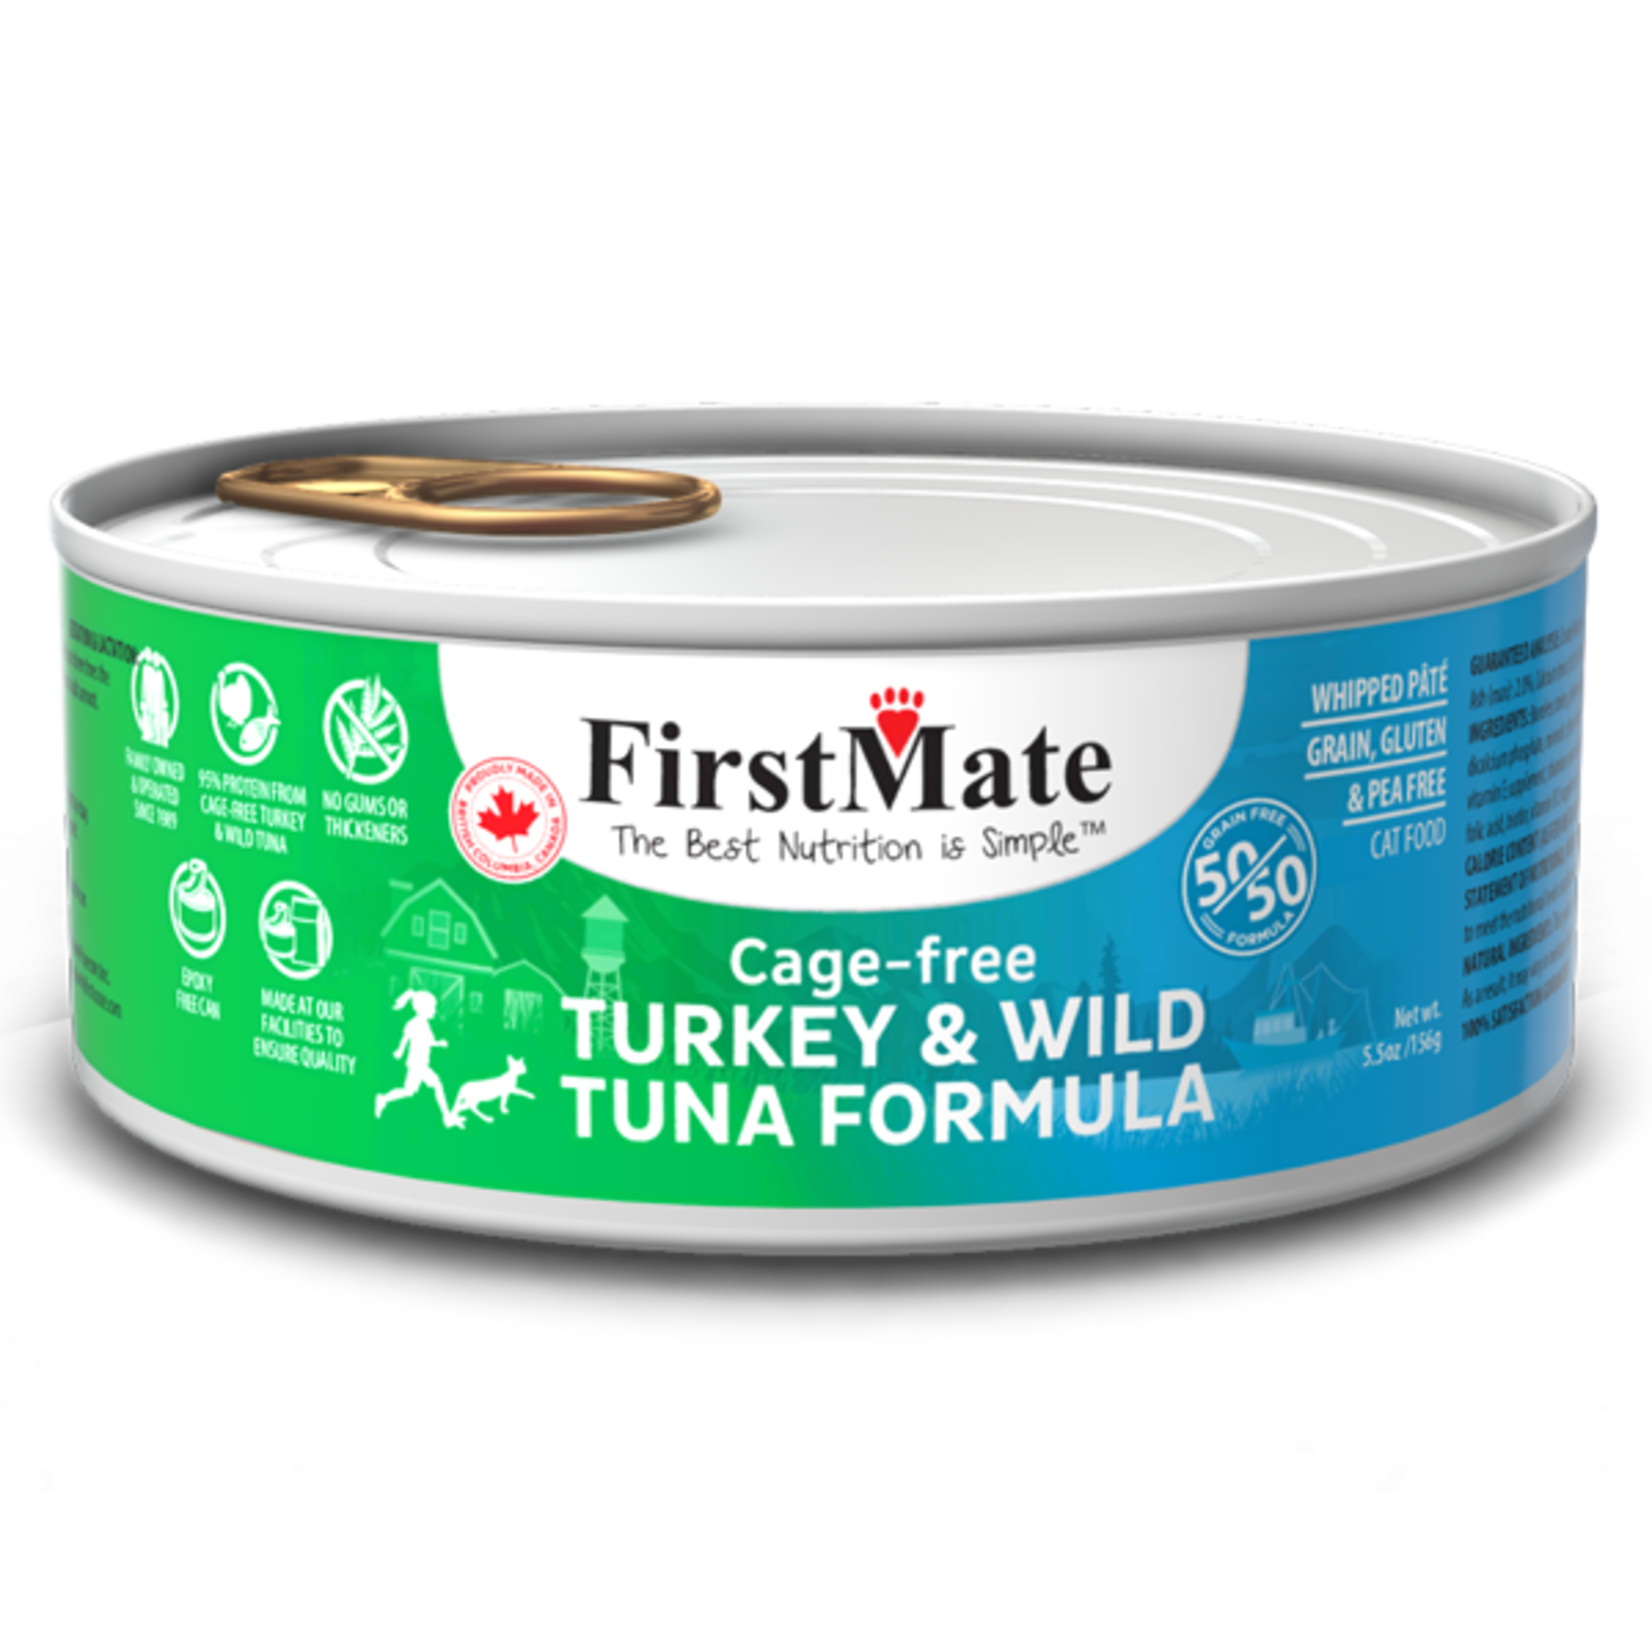 First Mate FirstMate Cat GF 50/50 Cage Free Turkey/Wild Tuna 5.5 oz